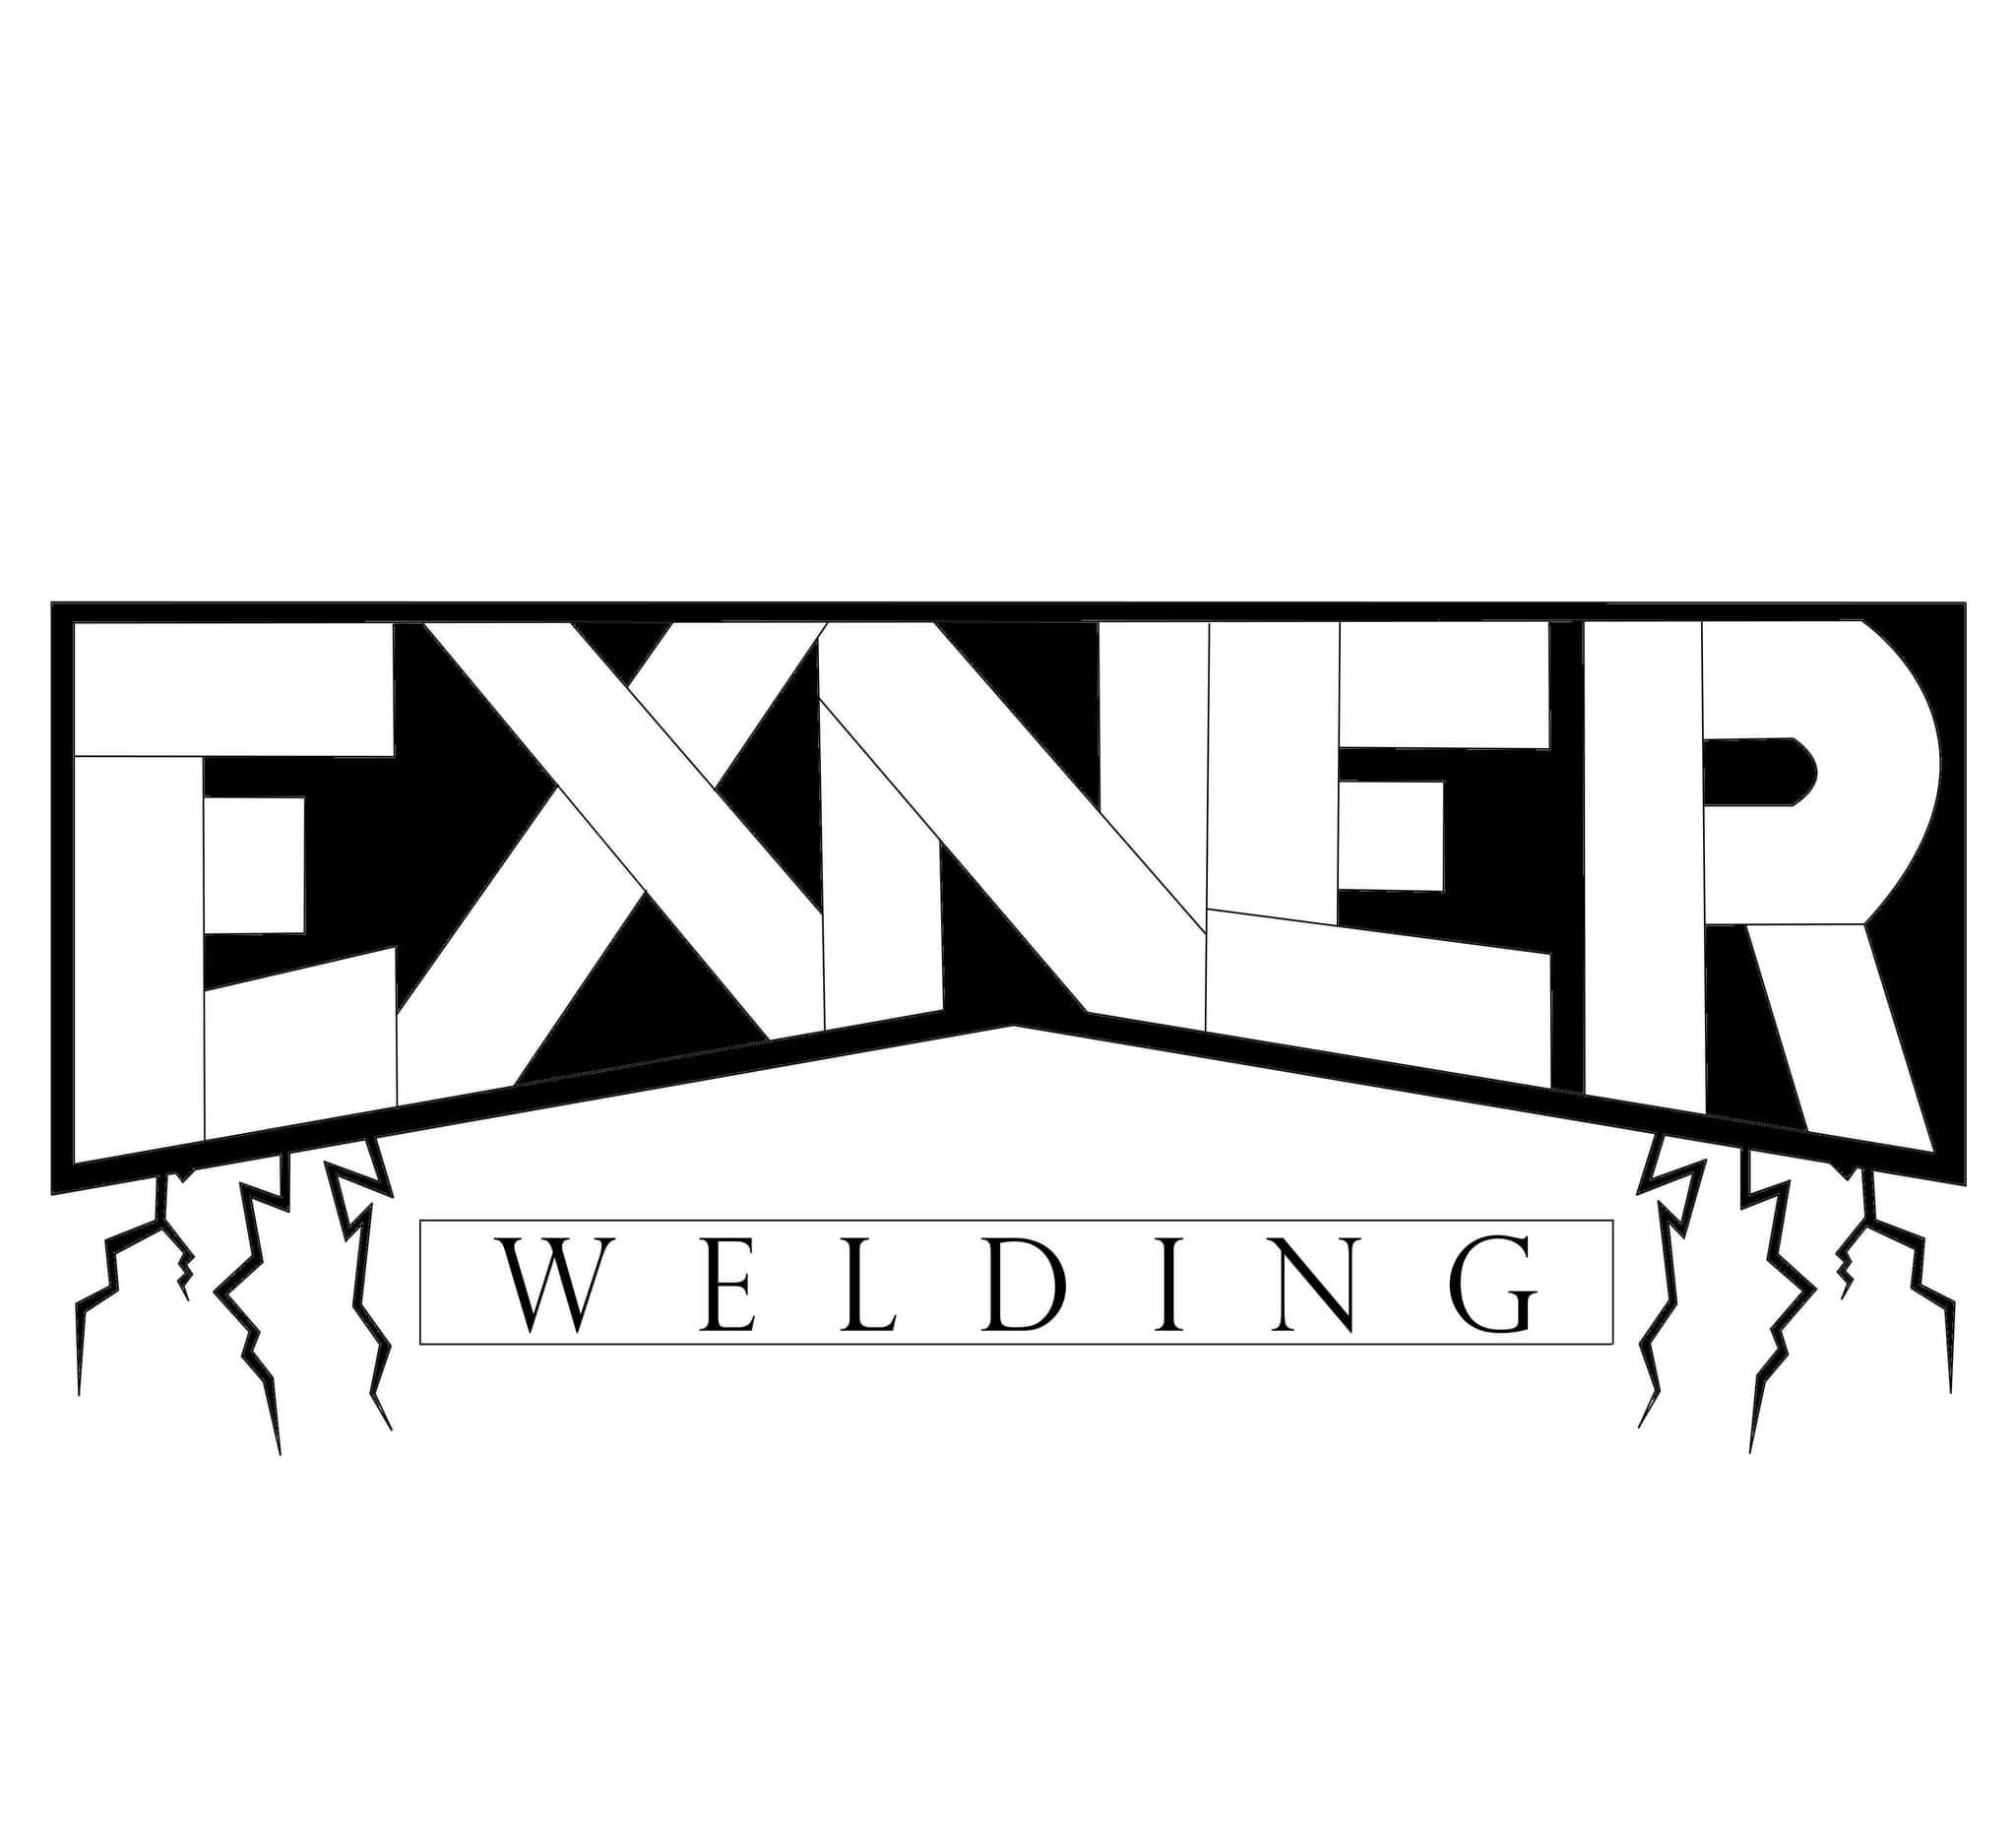 Exner Welding & Fabrication Logo